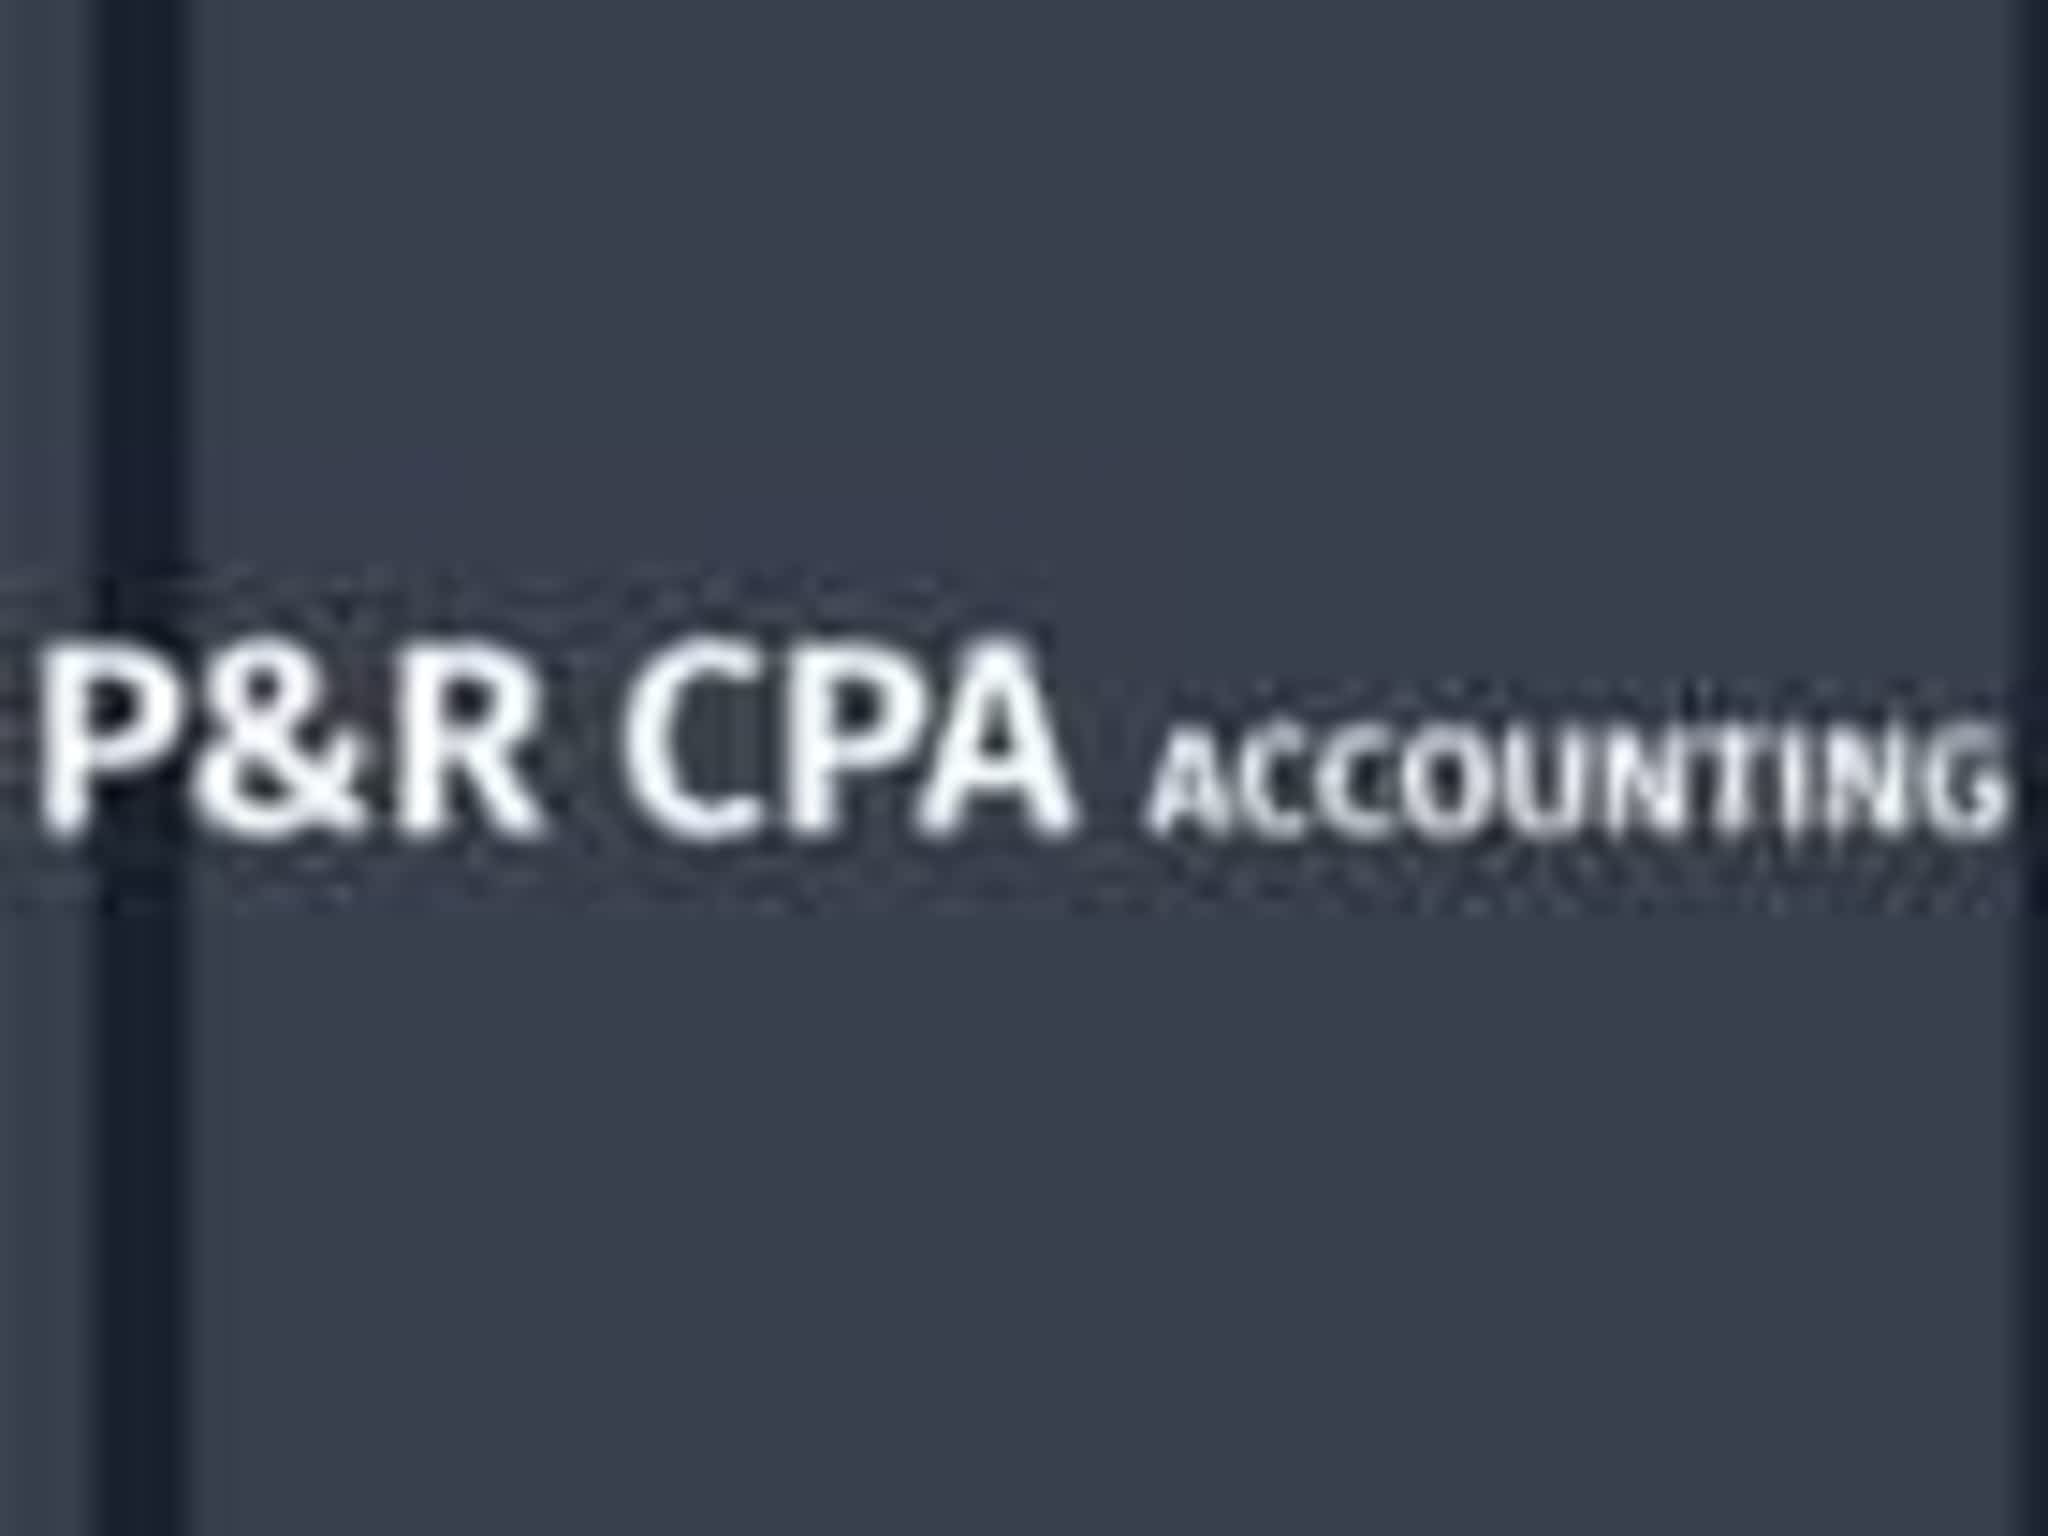 photo P&R CPA Accounting